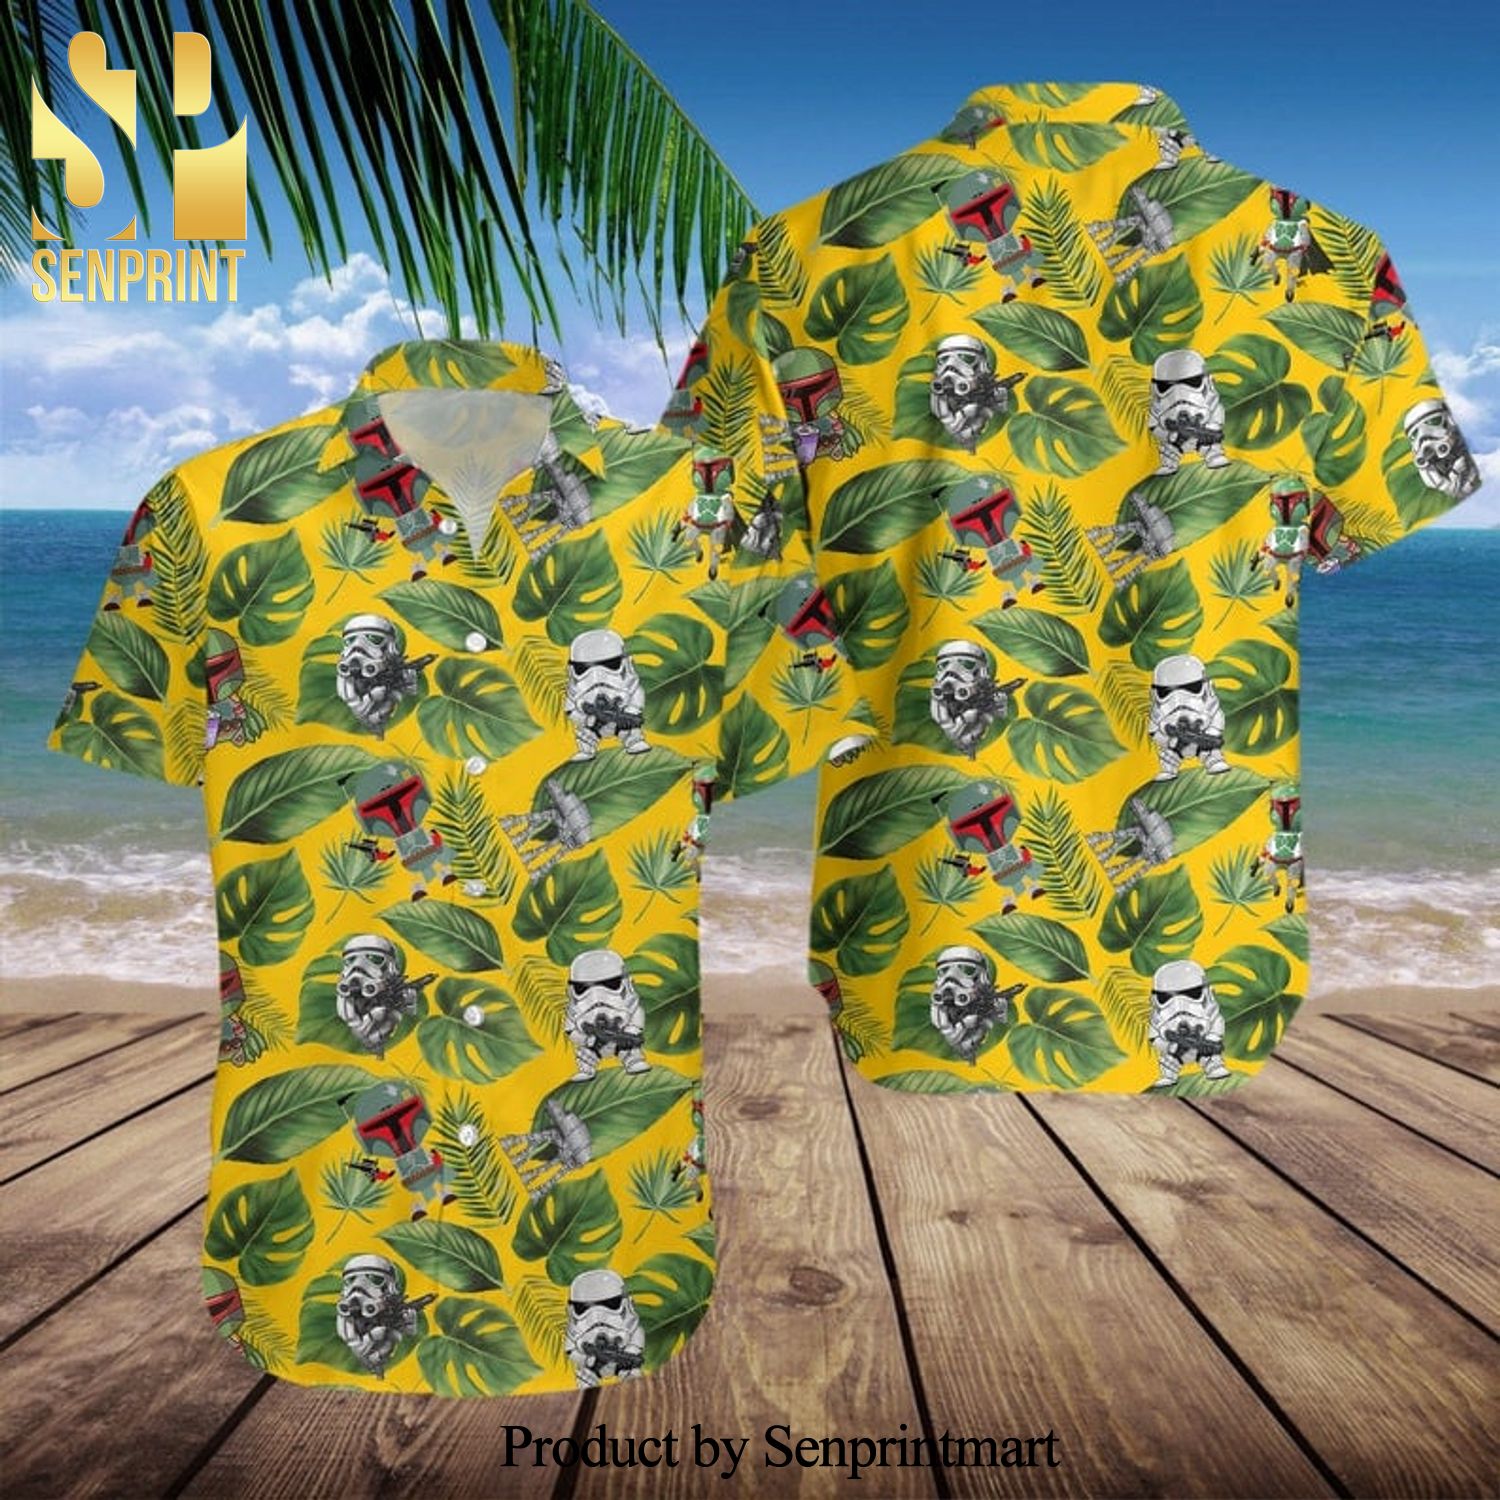 Chibi Stormtrooper Star Wars Tropical Forest Full Printing Hawaiian Shirt – Yellow